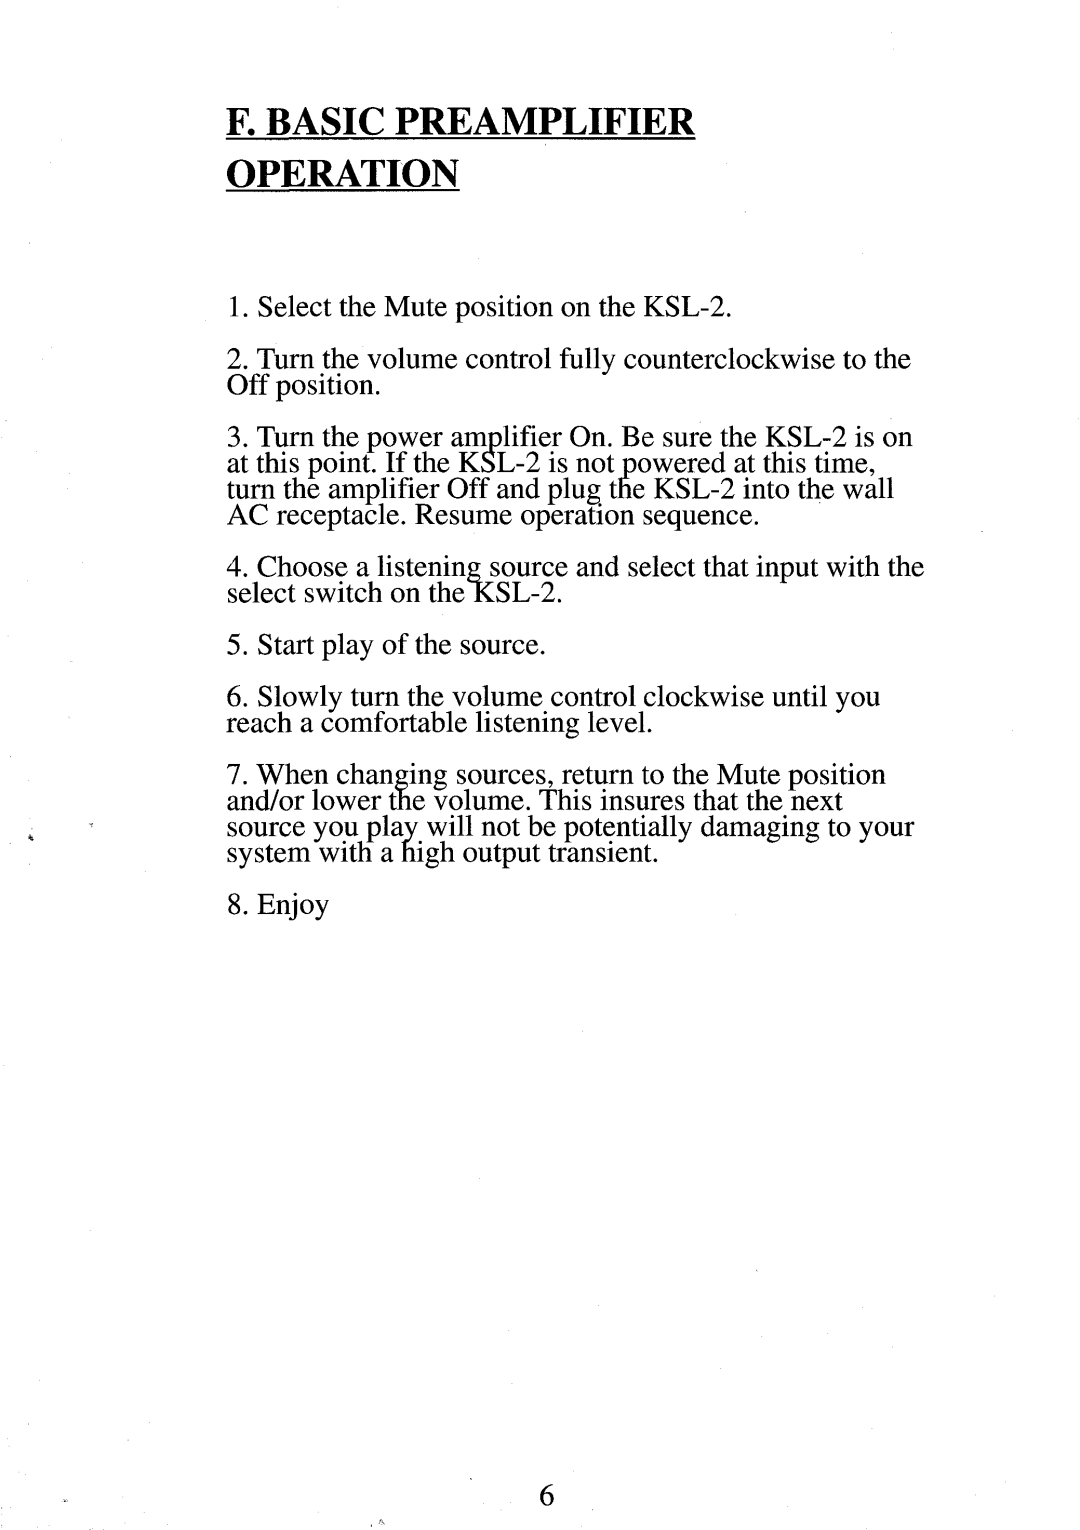 Krell Industries kSL-2 manual F.Basic Preamplifier Operation 